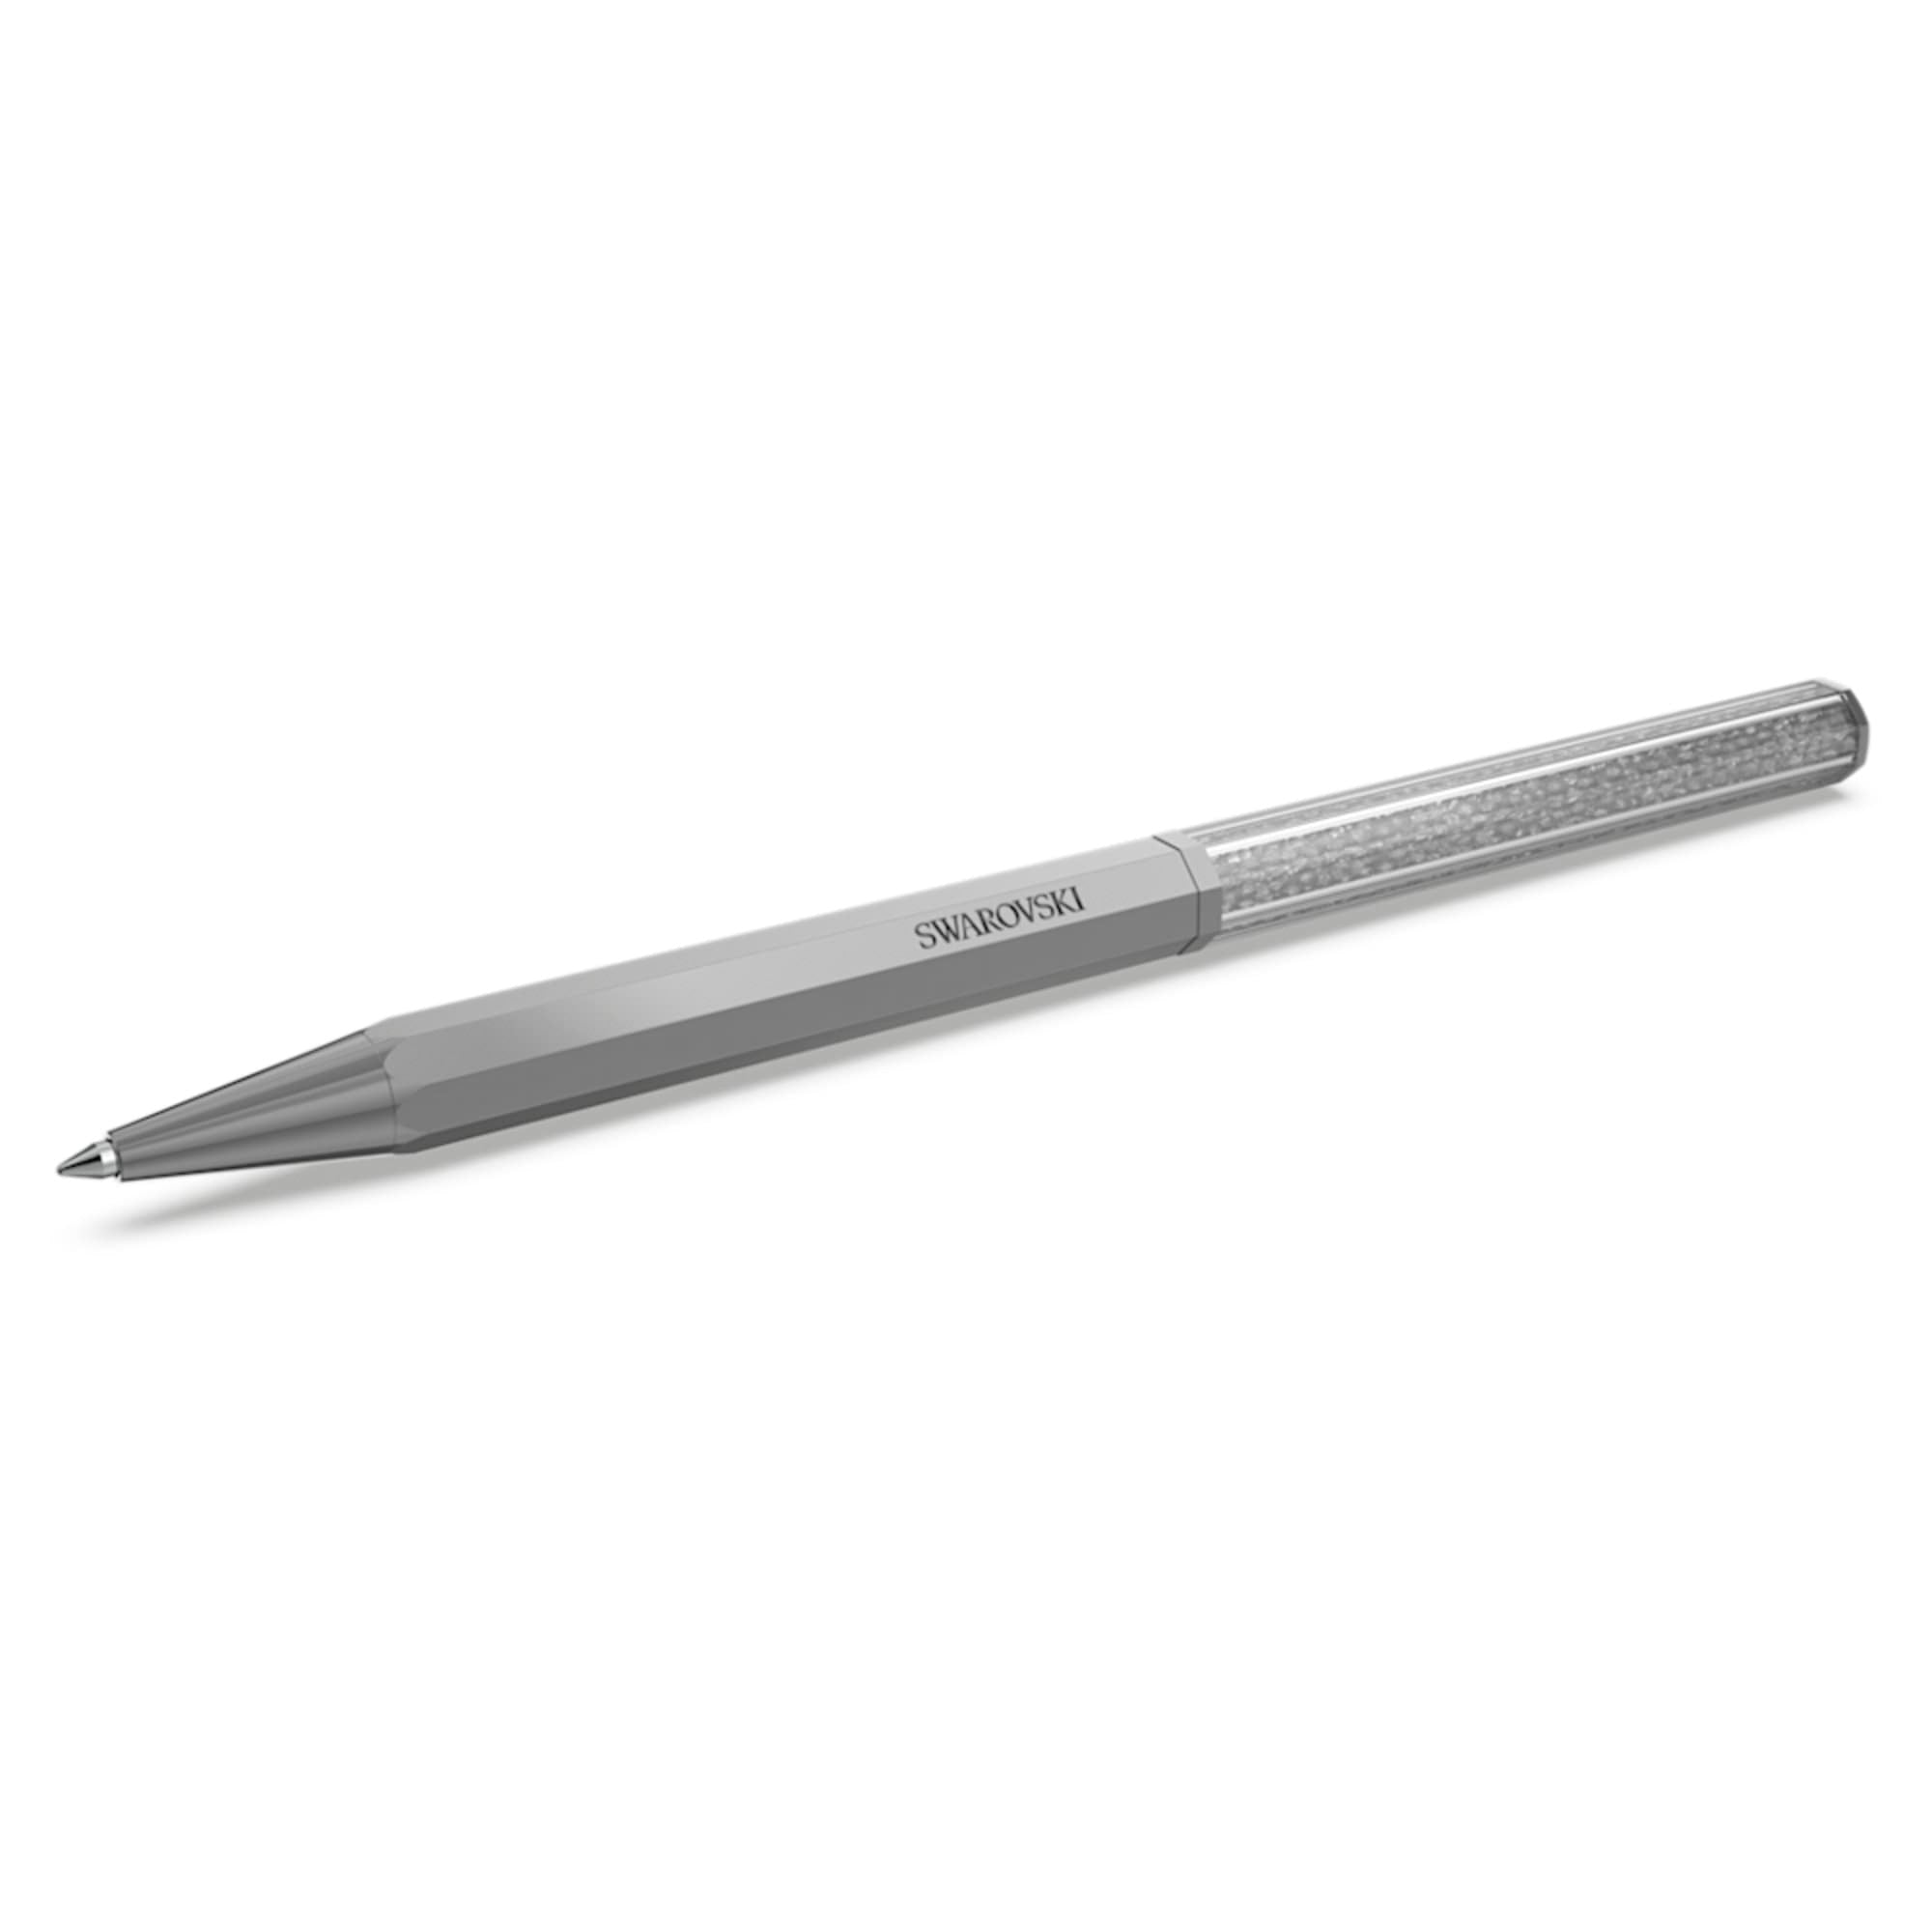 Swarovski Crystalline ballpoint pen, Octagon shape, Gray, Graphite plated